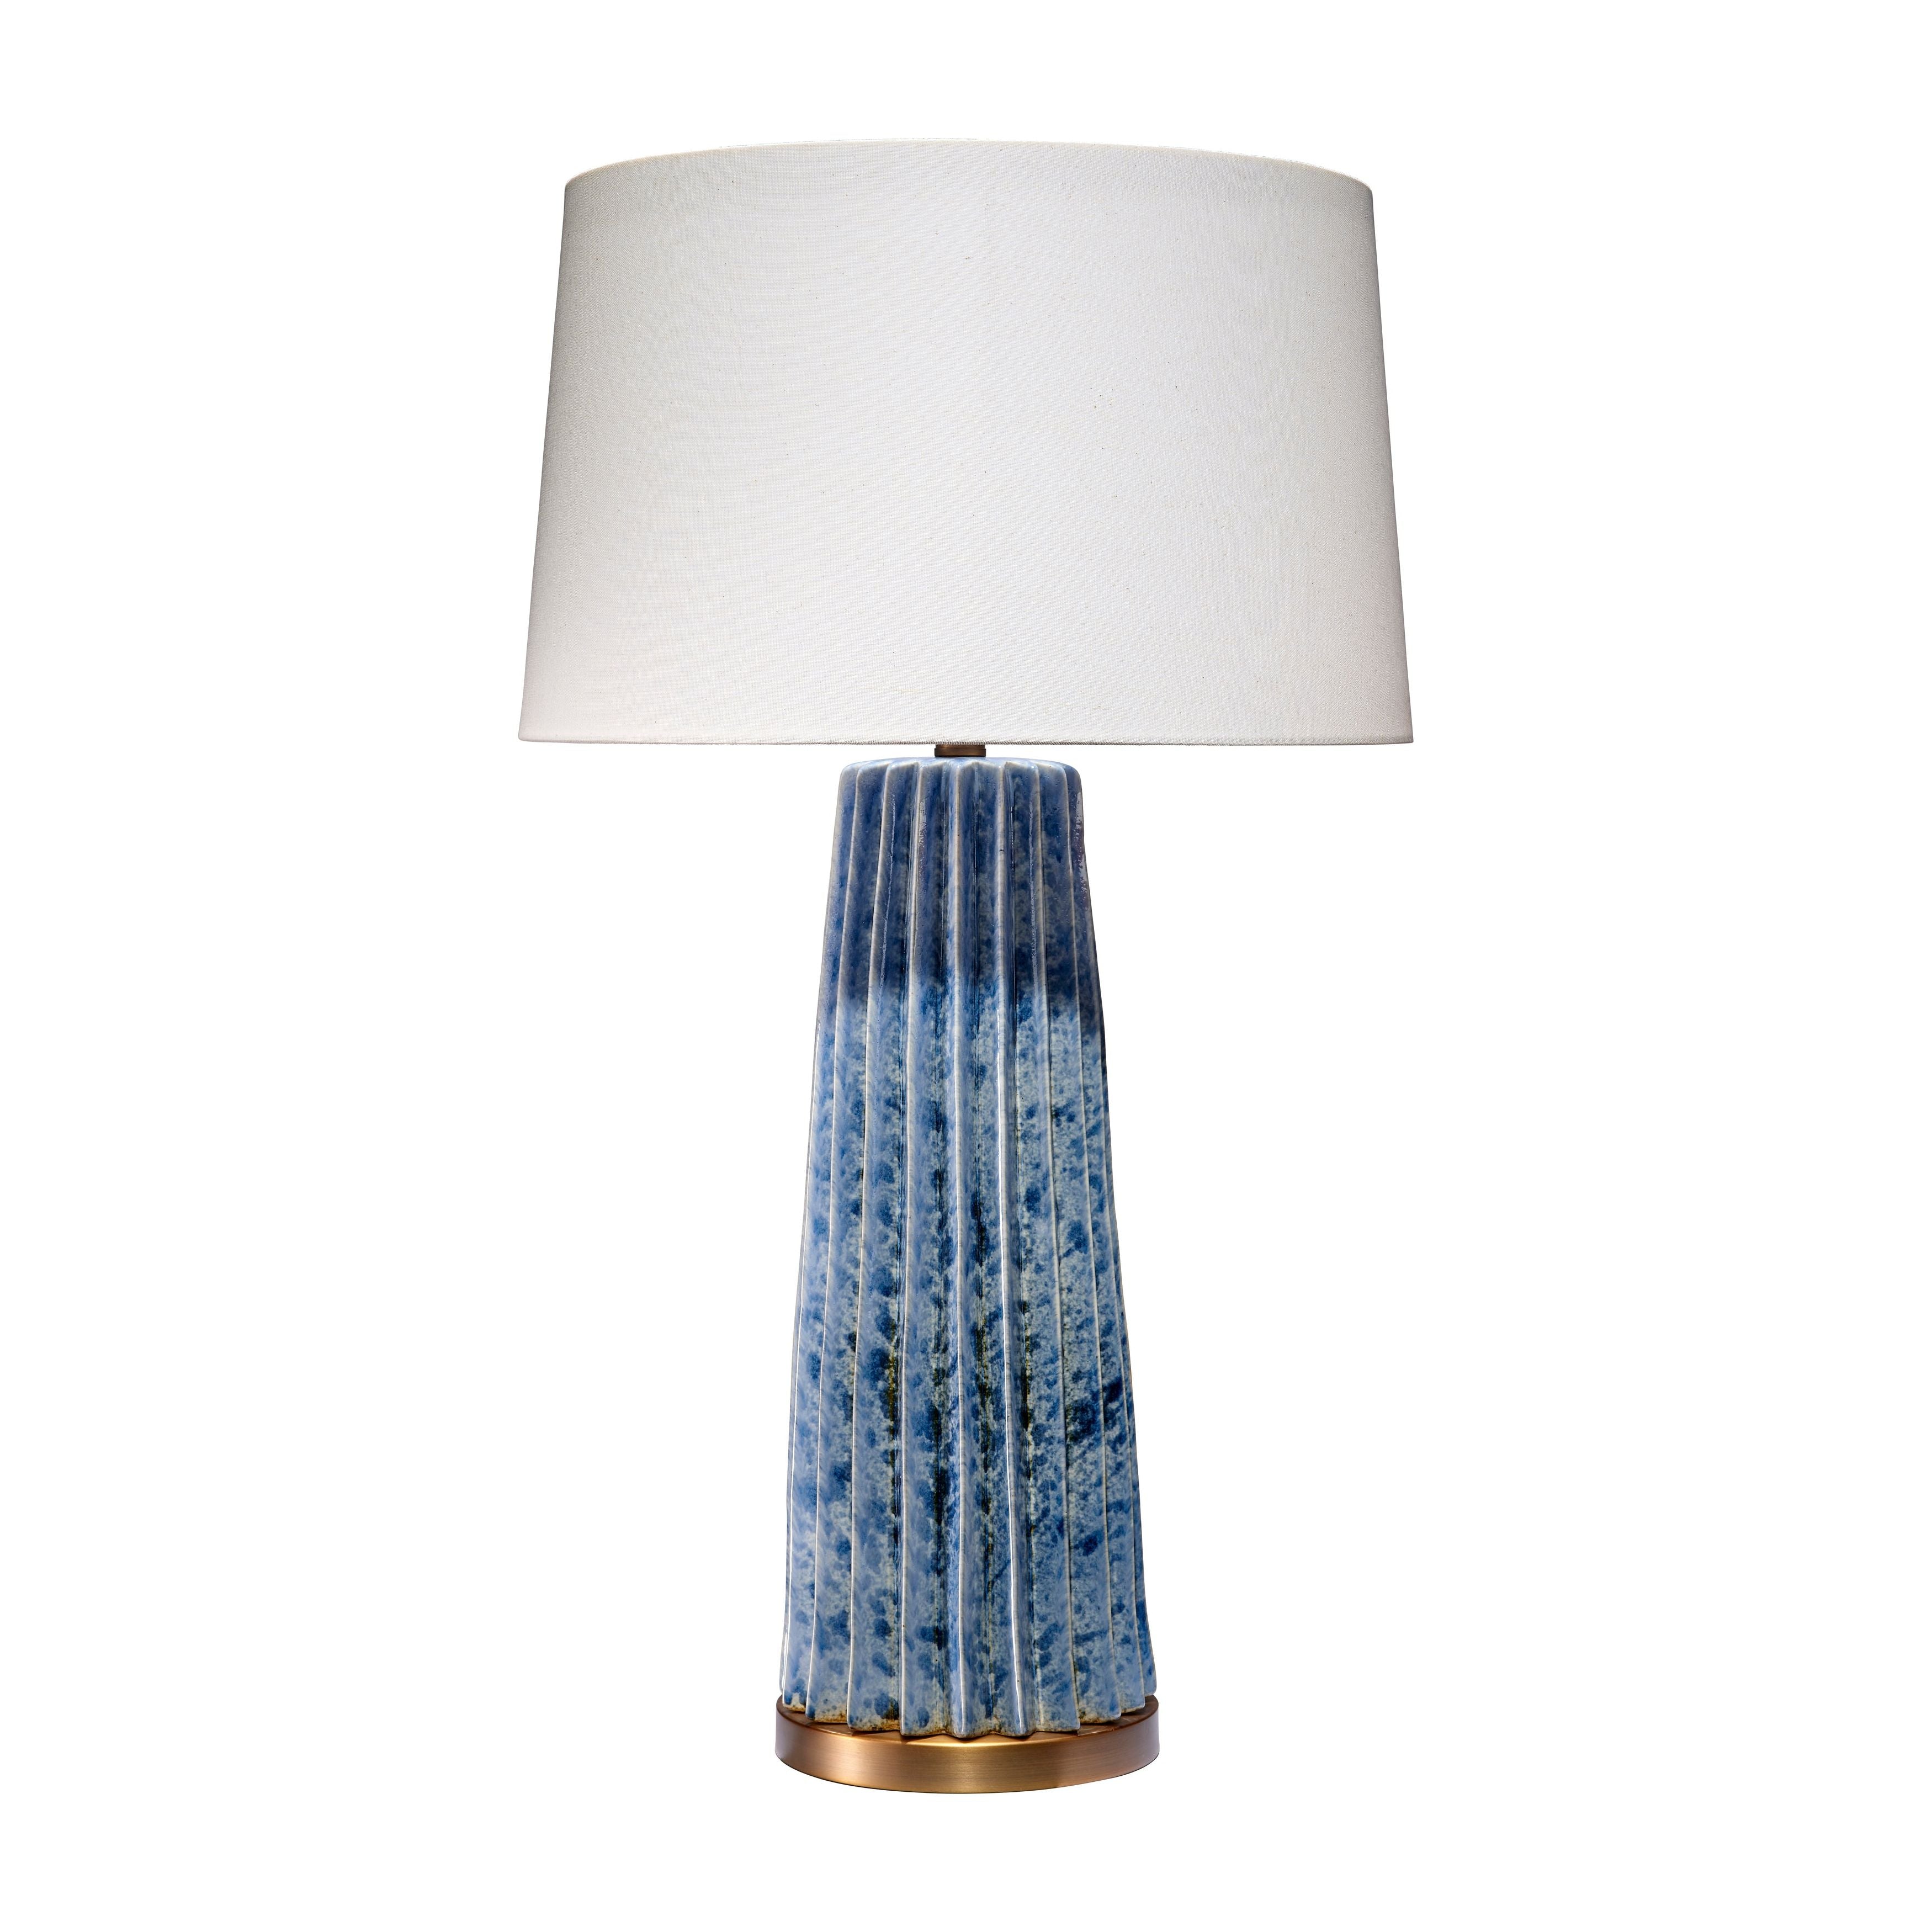 Jamie Young Company - 9PLEATEDTLBL -  Pleated Table Lamp - Pleated - Cornflower Blue